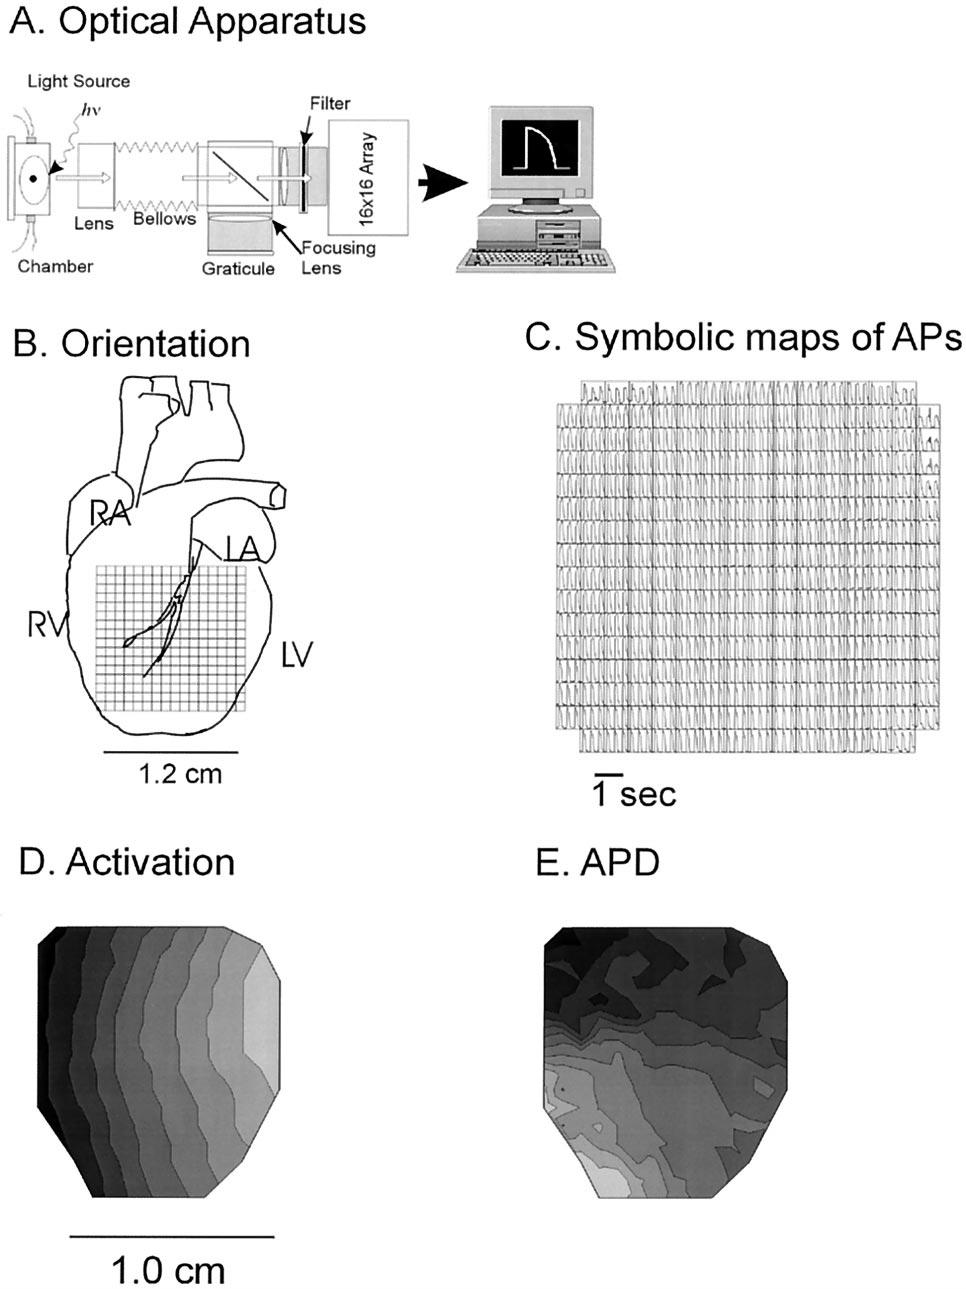 Choi et al Figure 1. Schematics of optical apparatus.